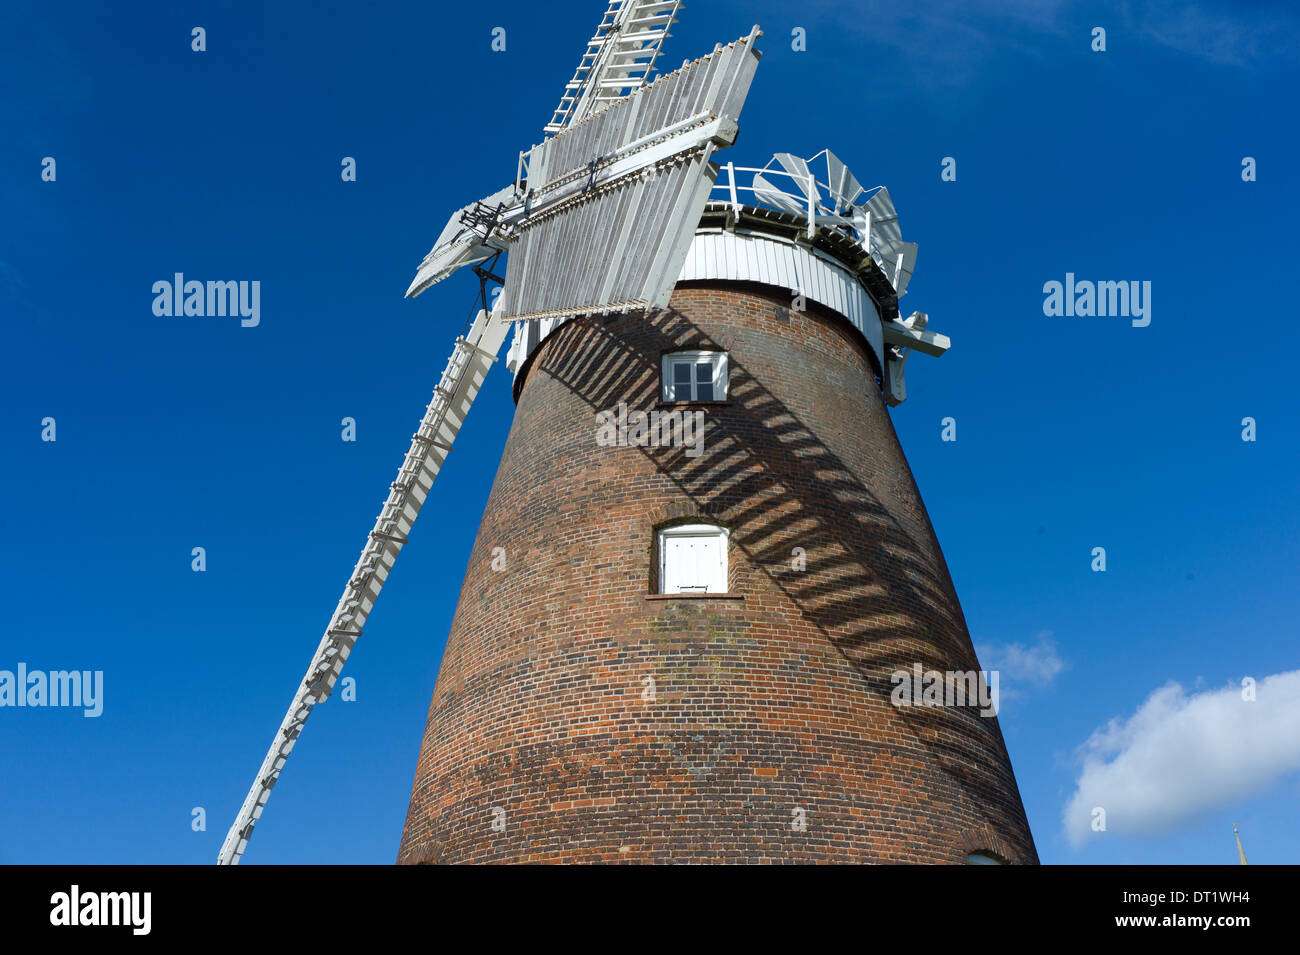 Thaxted Windmill, John Webb's Windmill, Essex, England. February 2014 Stock Photo